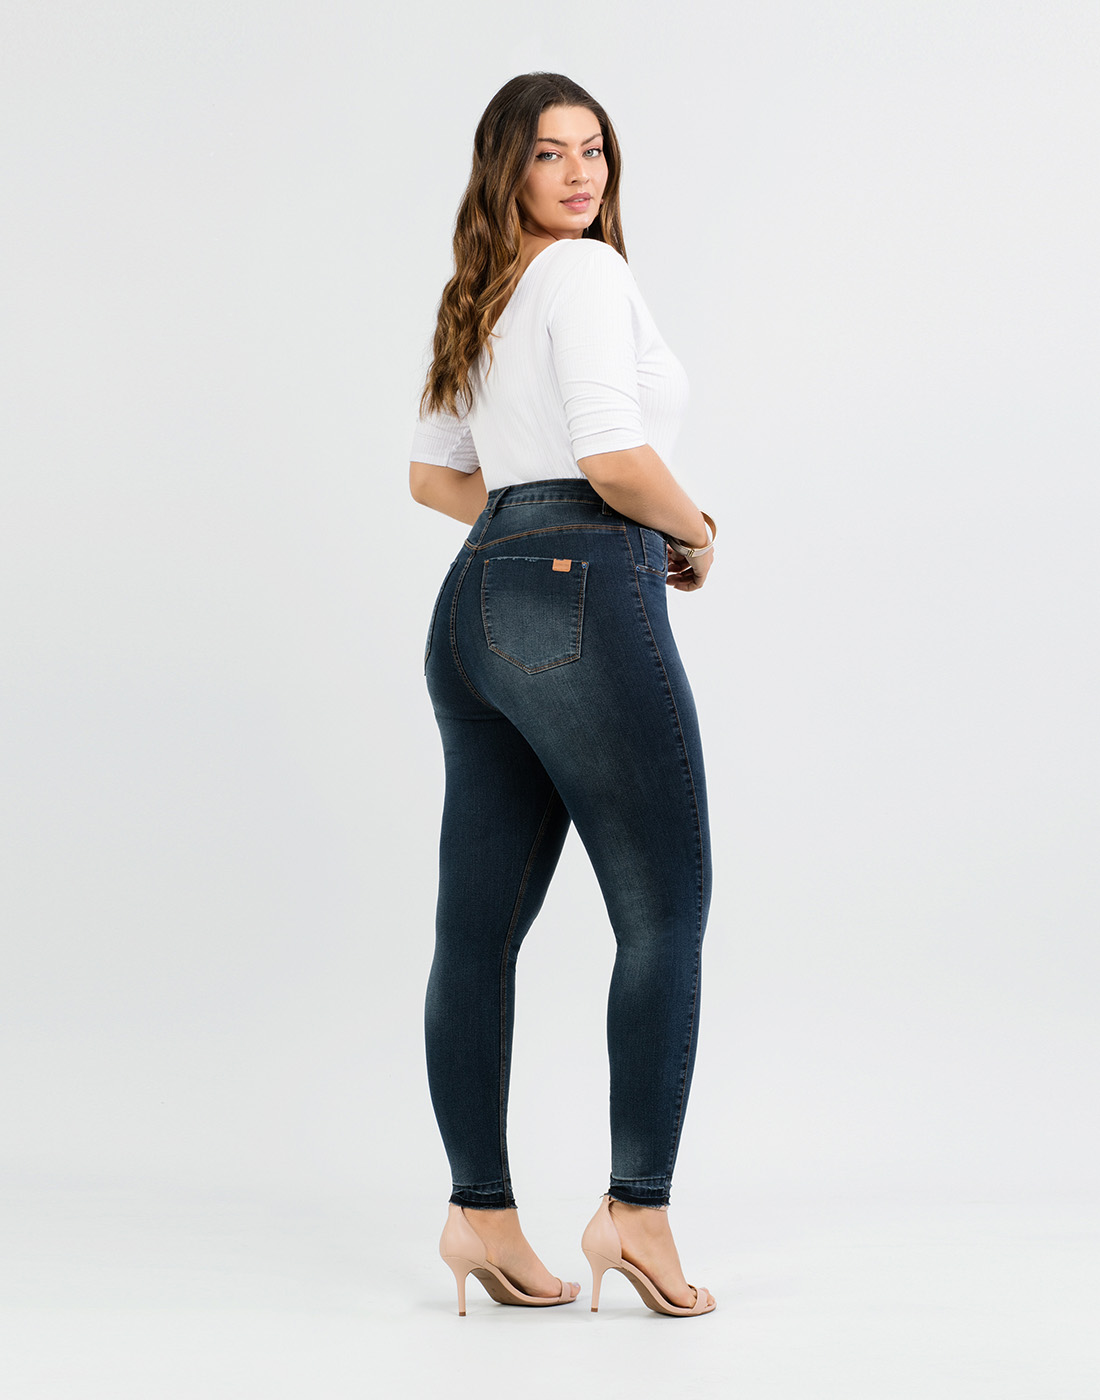 Calça Jeans Skinny Cint. Media Fit For Me Lunender Mais Mulher